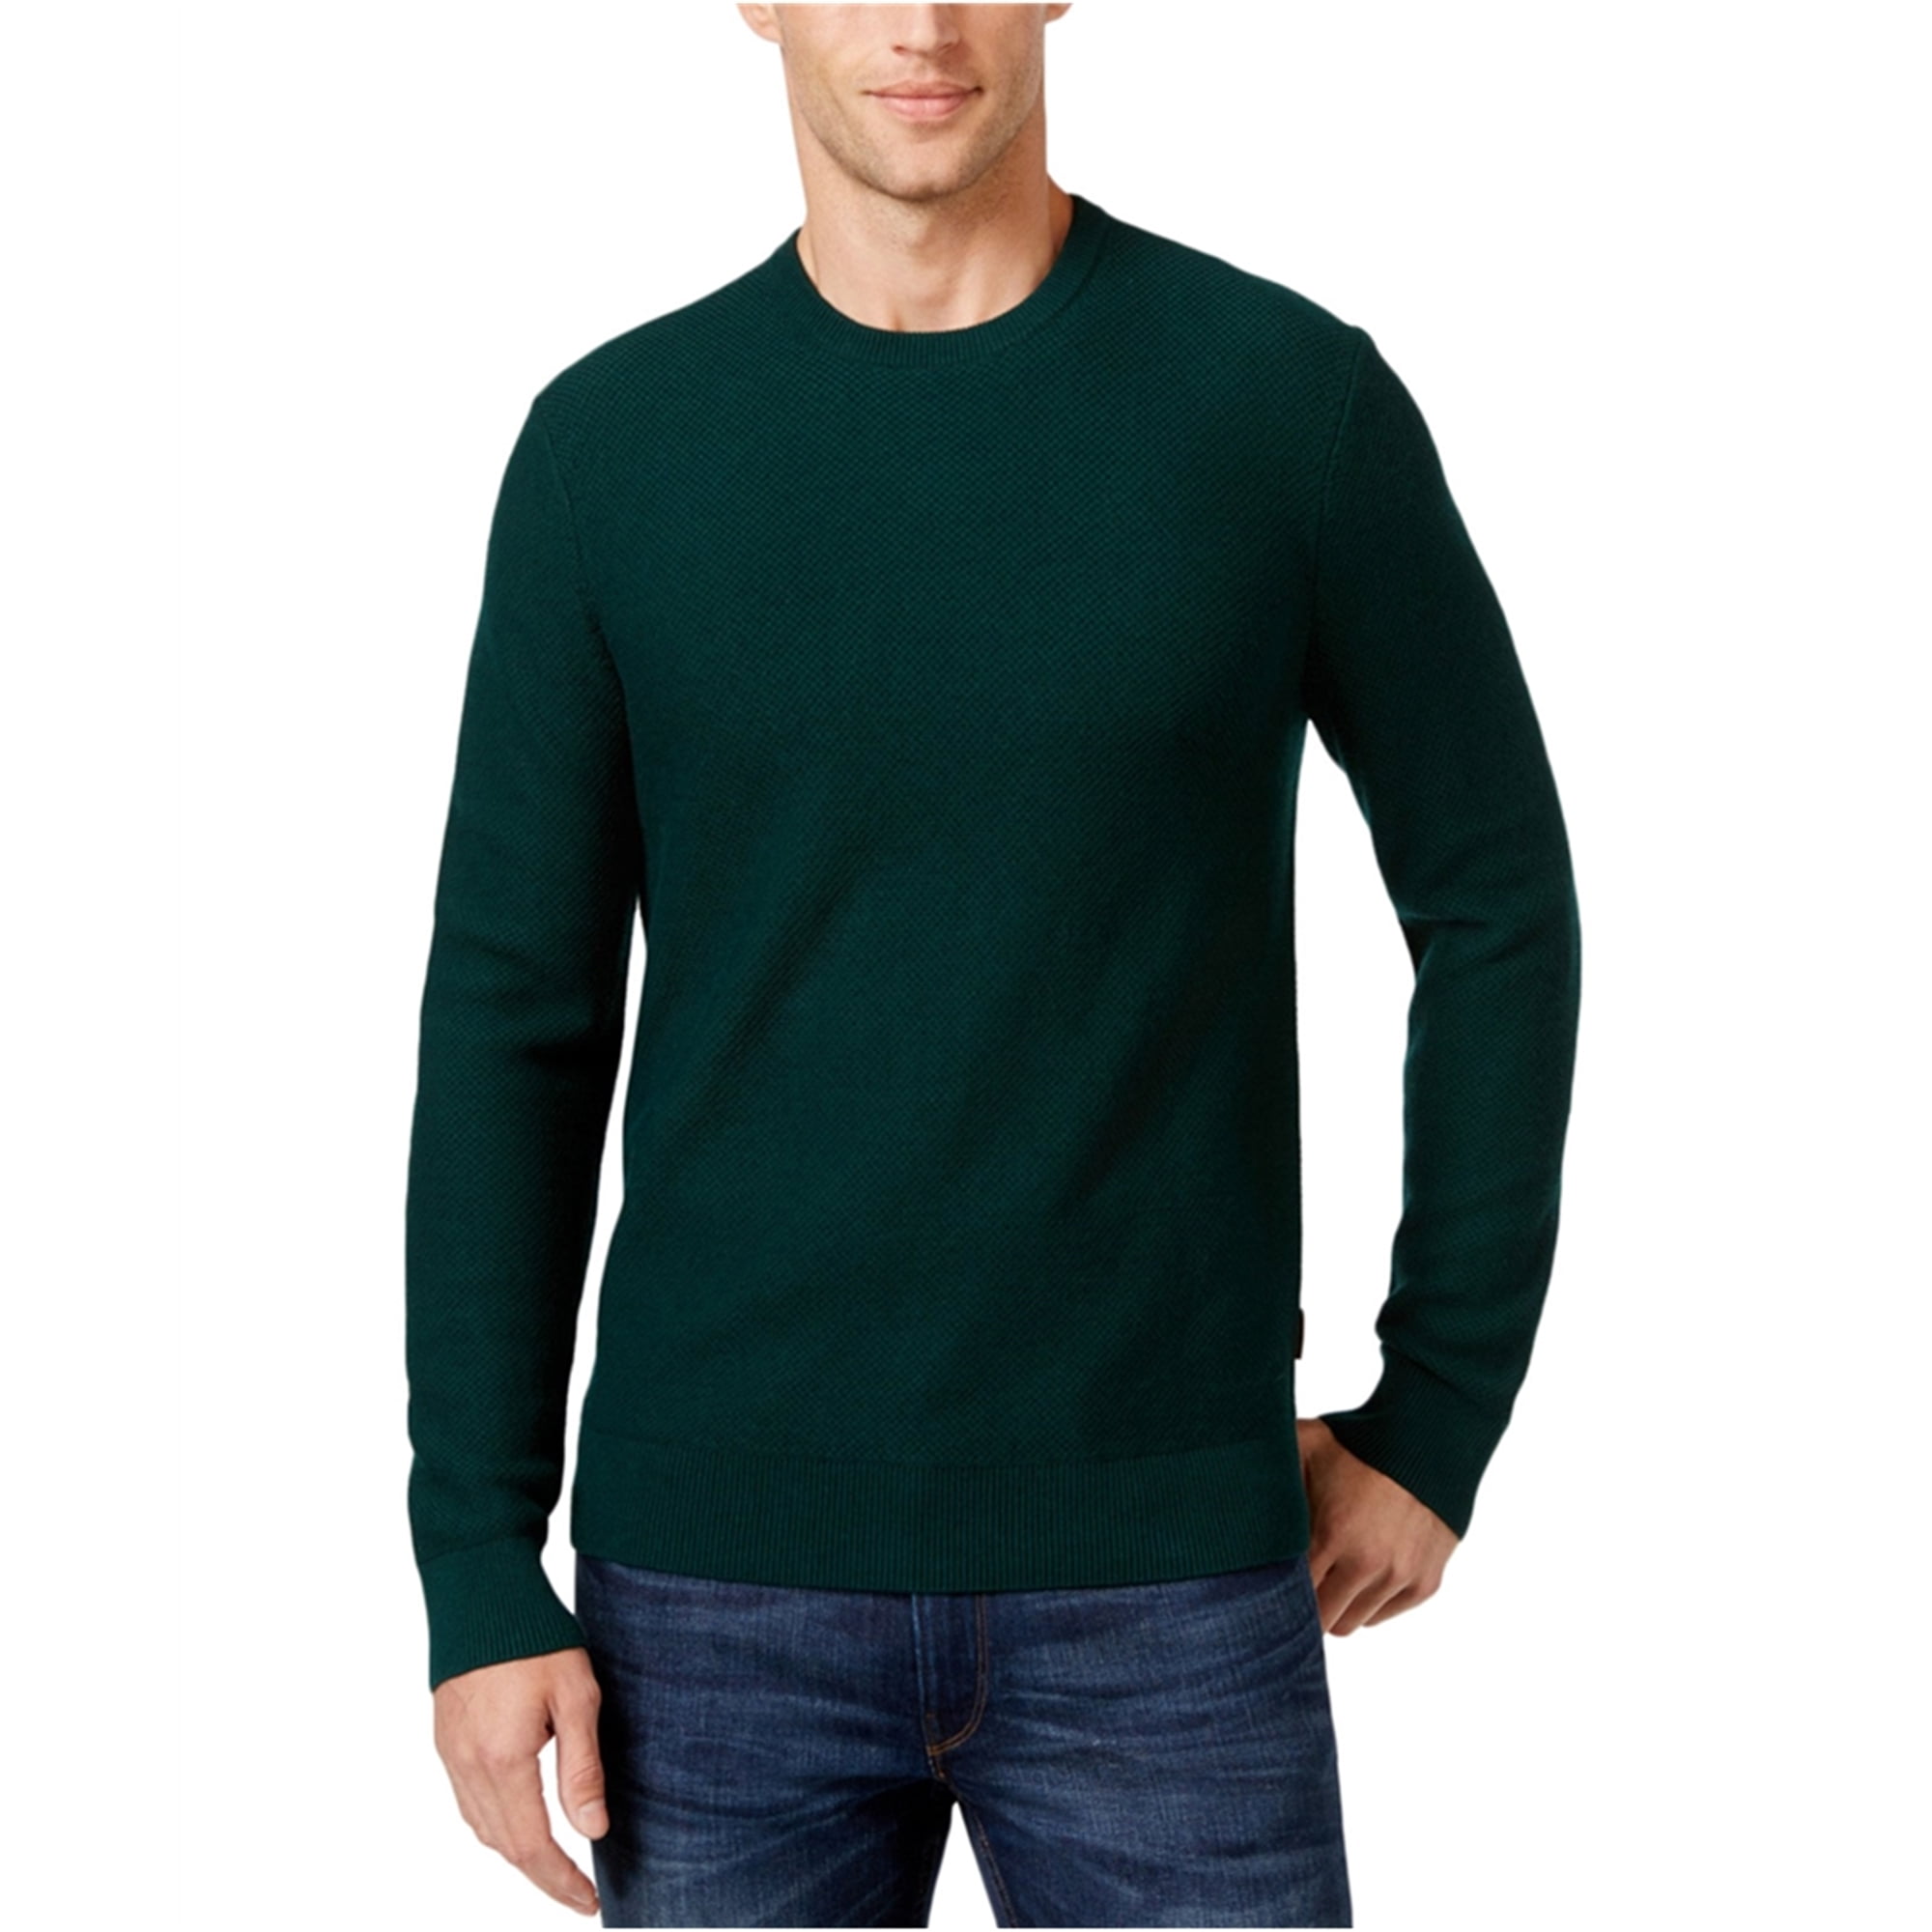 Michael Kors Mens Textured Knit Sweater, Green, Small 